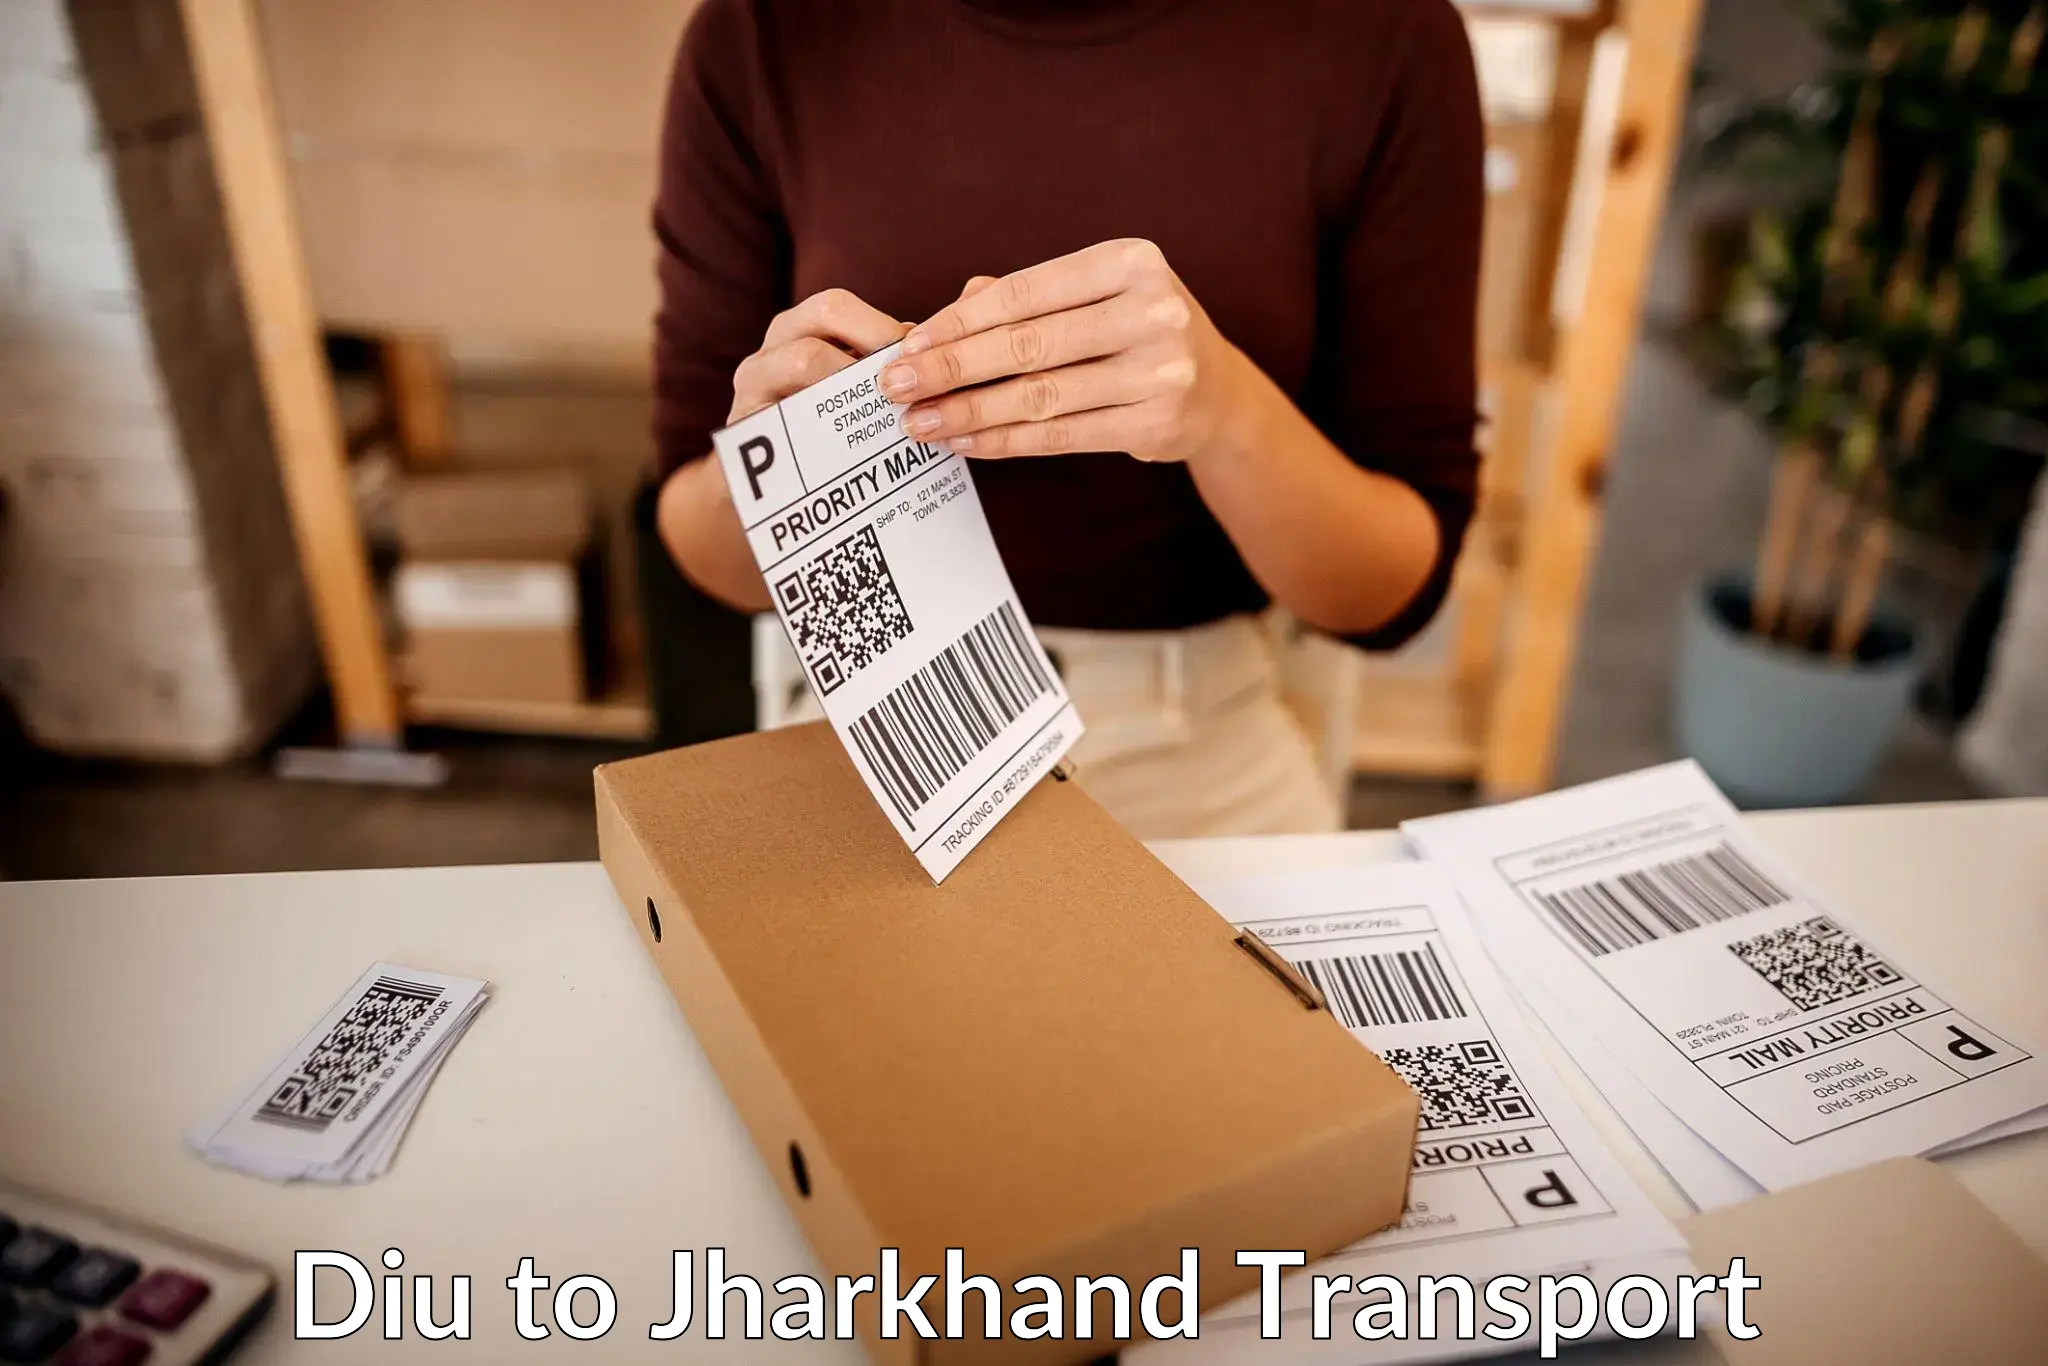 Furniture transport service Diu to Jamshedpur